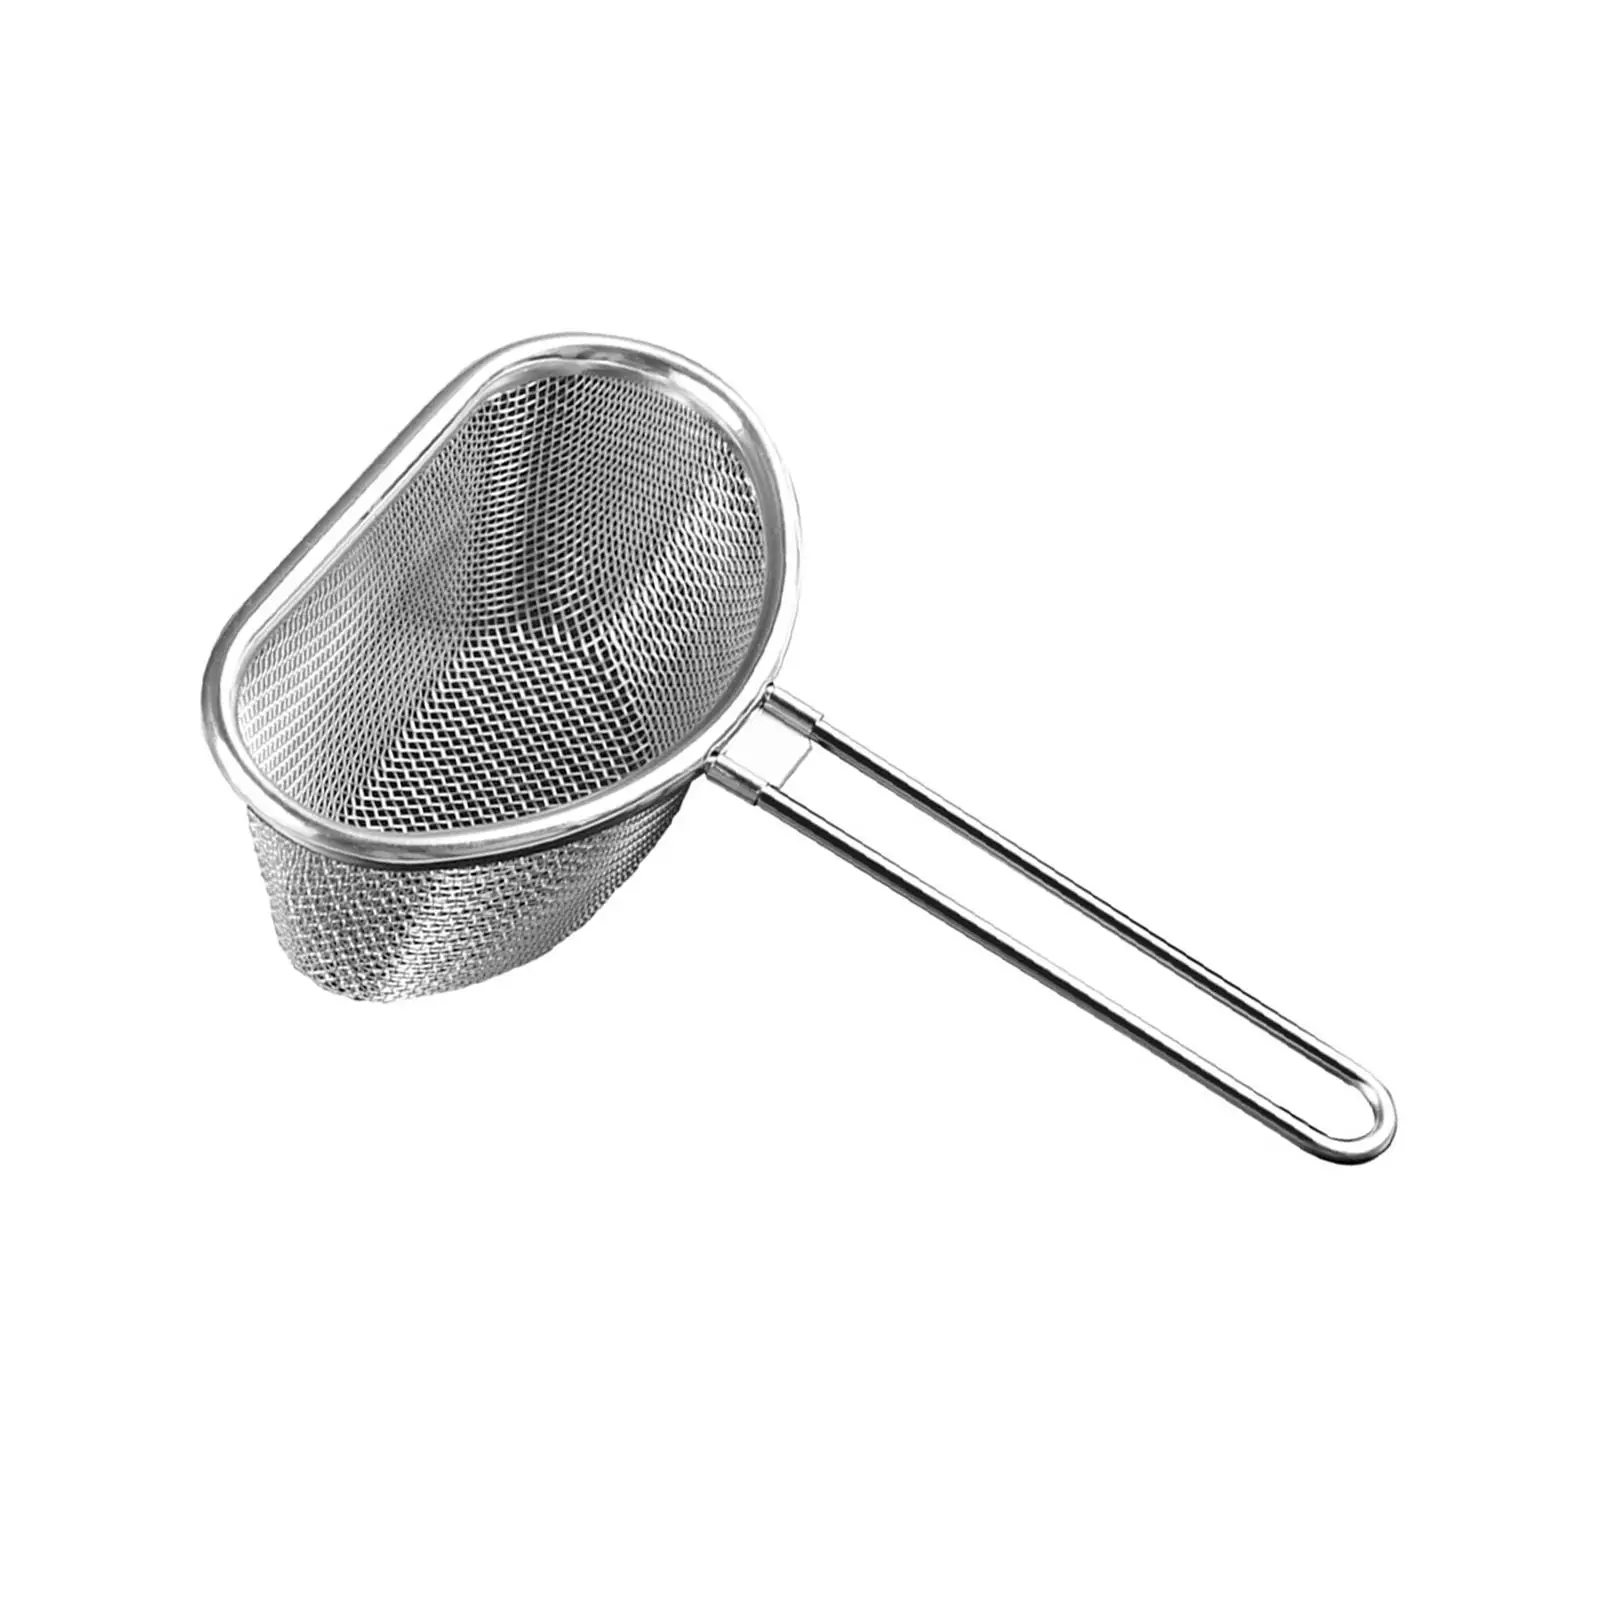 Food Colander with Handle Frying Filter Spoon Hot Pot Colander Mesh Strainer for Pasta --- Home kitchen Frying